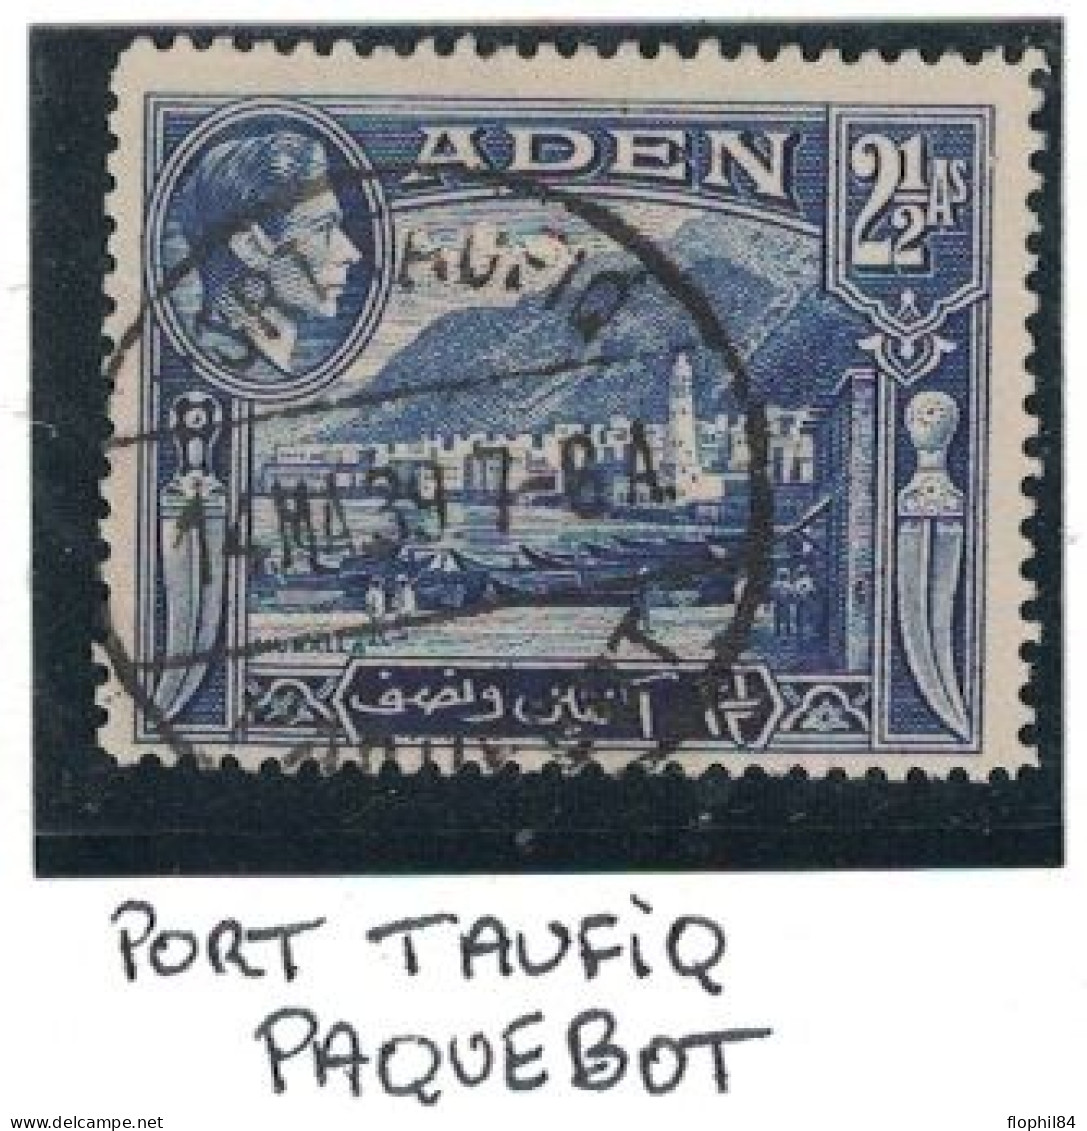 PAQUEBOT - MARITIME - ADEN - CACHET PORT-TAIFIQ - PAQUEBOT - ESCALE EGYPTE. - Aden (1854-1963)